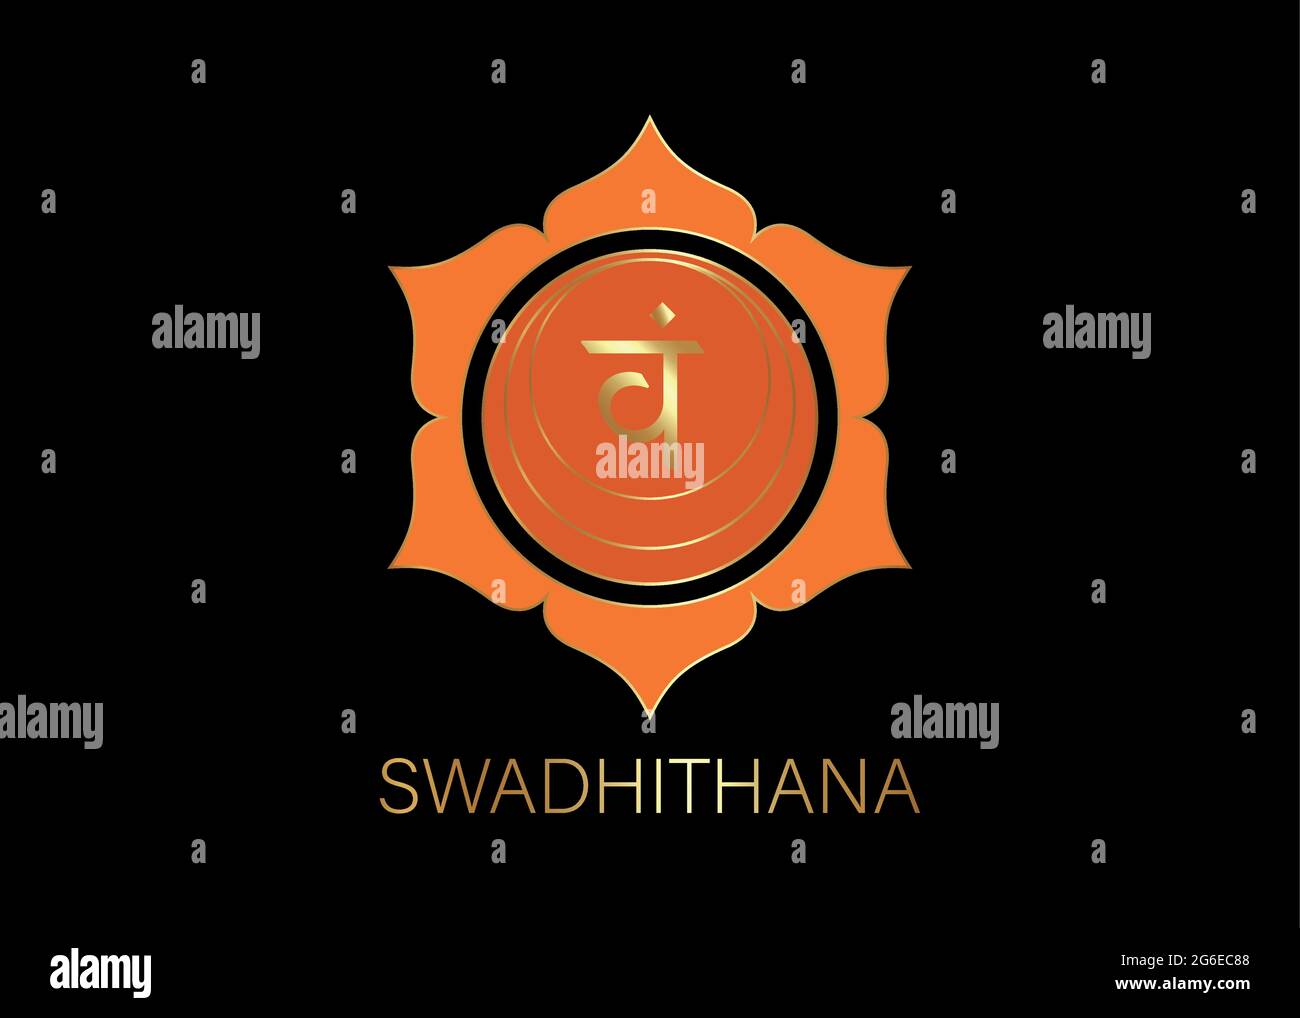 Zweites Swadhisthana-Chakra mit dem Hindu-Sanskrit-Samenmantra VAM. Orange und Gold flaches Design-Stil Symbol für Meditation, Yoga. Logo-Vorlage Stock Vektor